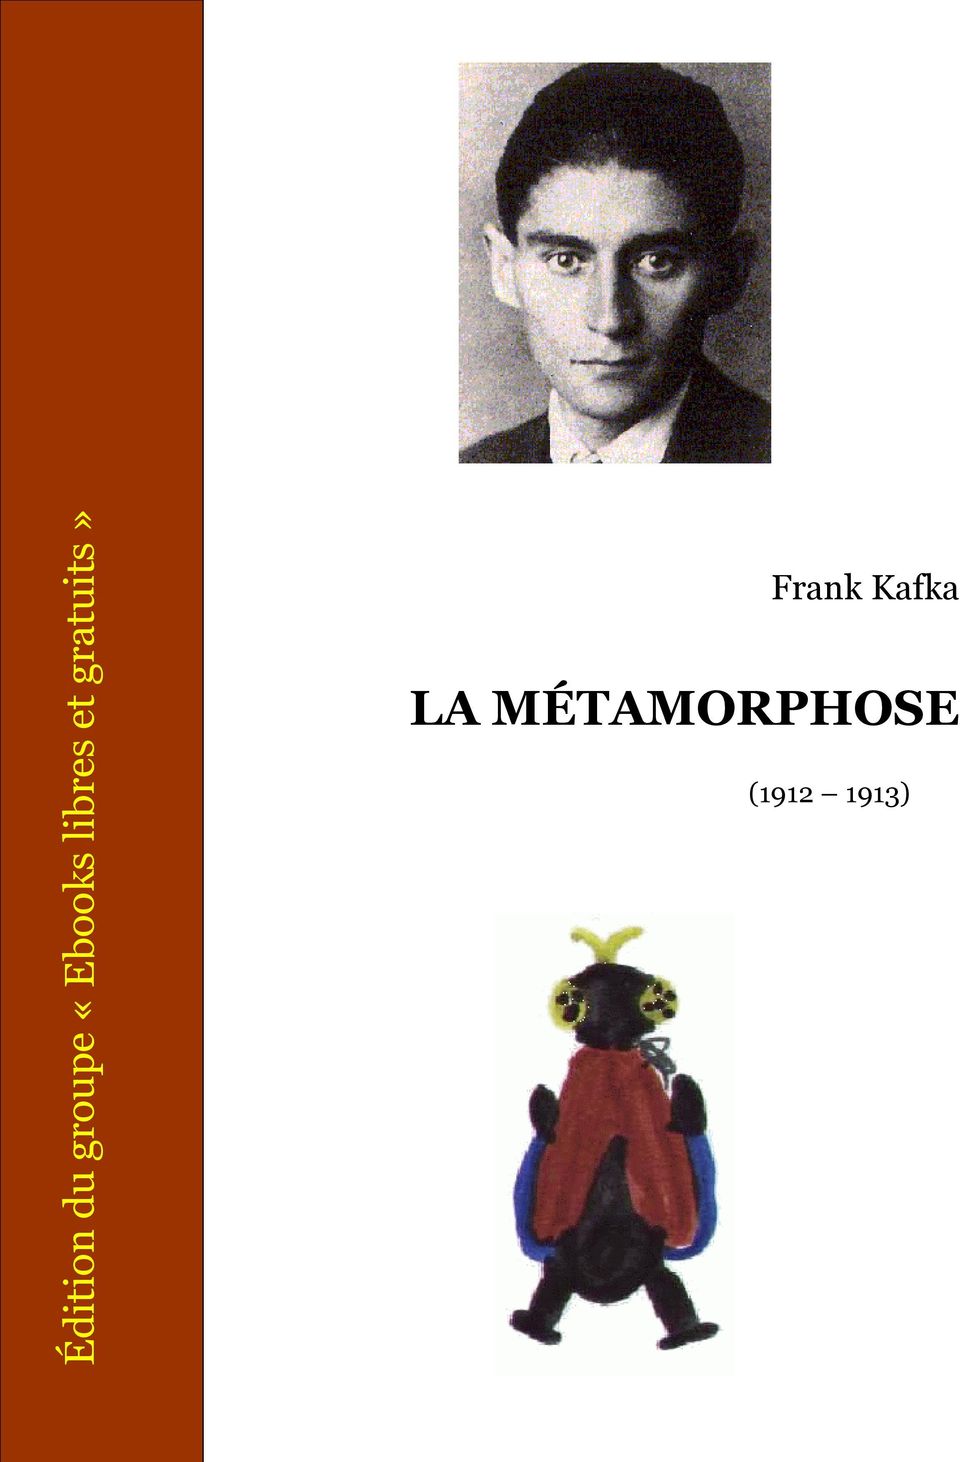 gratuits» Frank Kafka